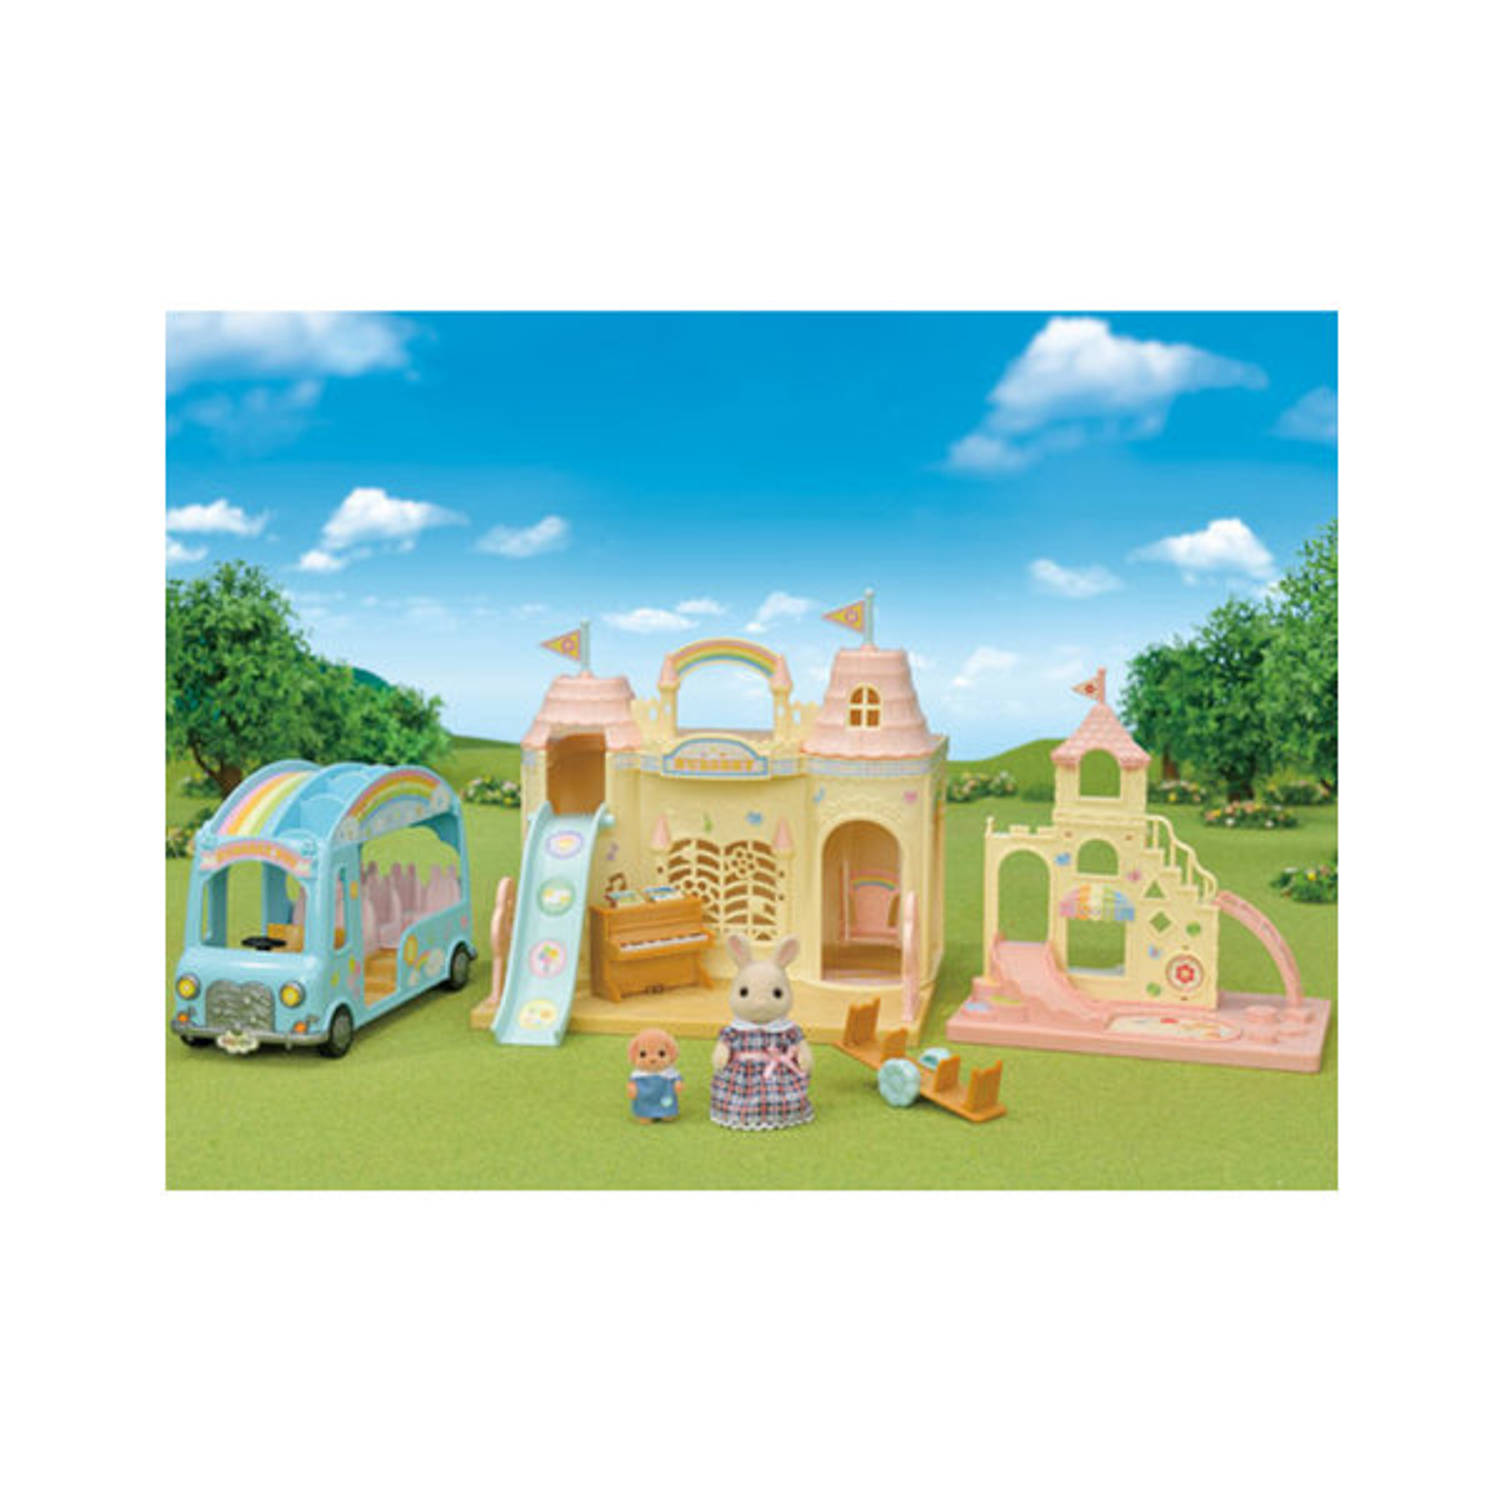 Sylvanian Families Baby Castle Nursery Gift Set 5670